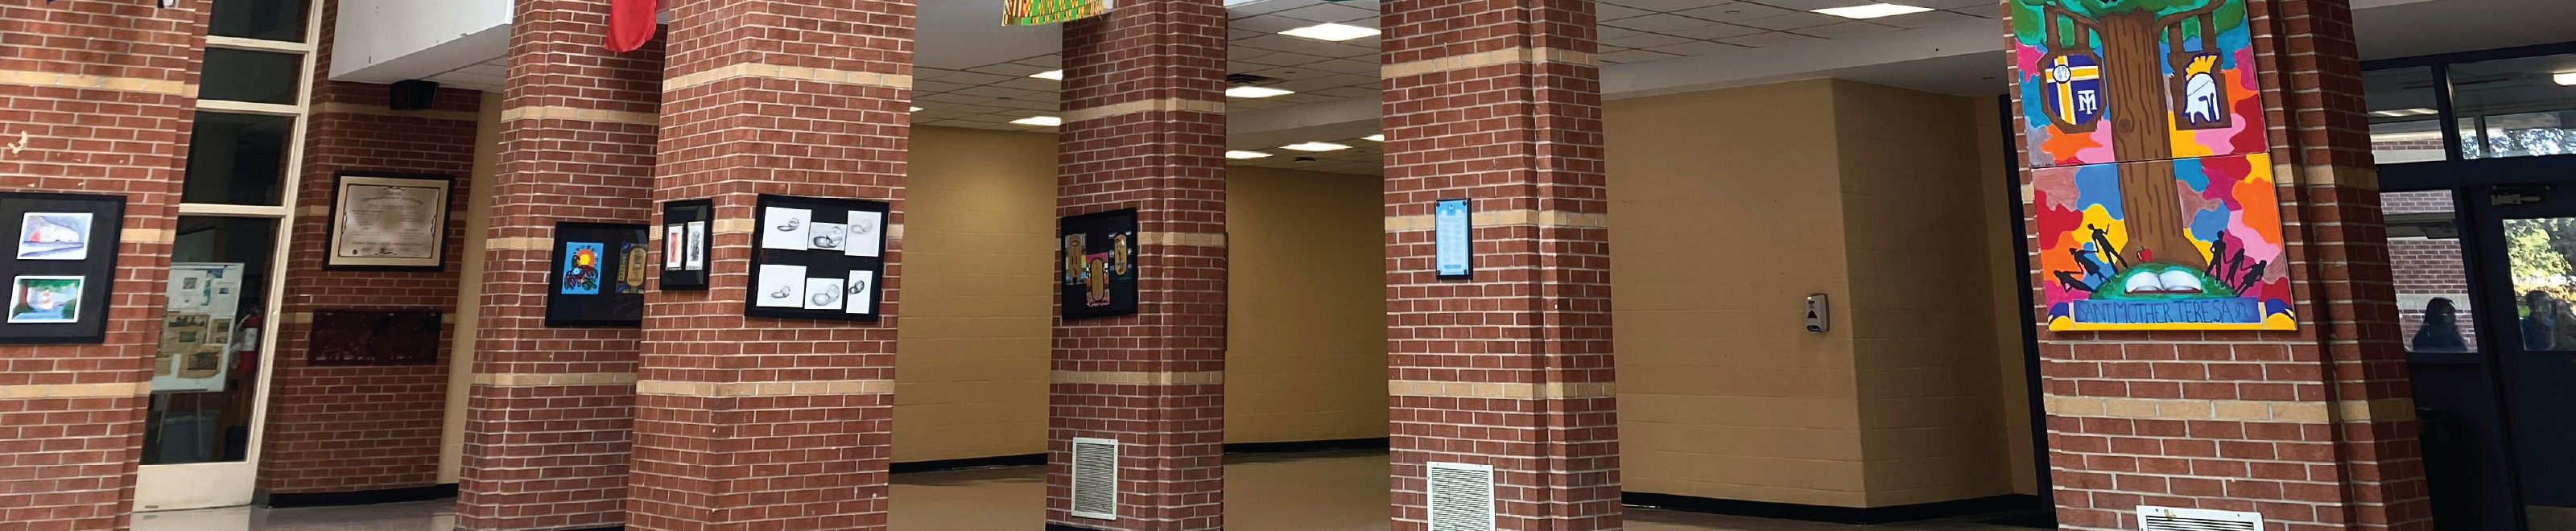 An image of the inside school hallway.